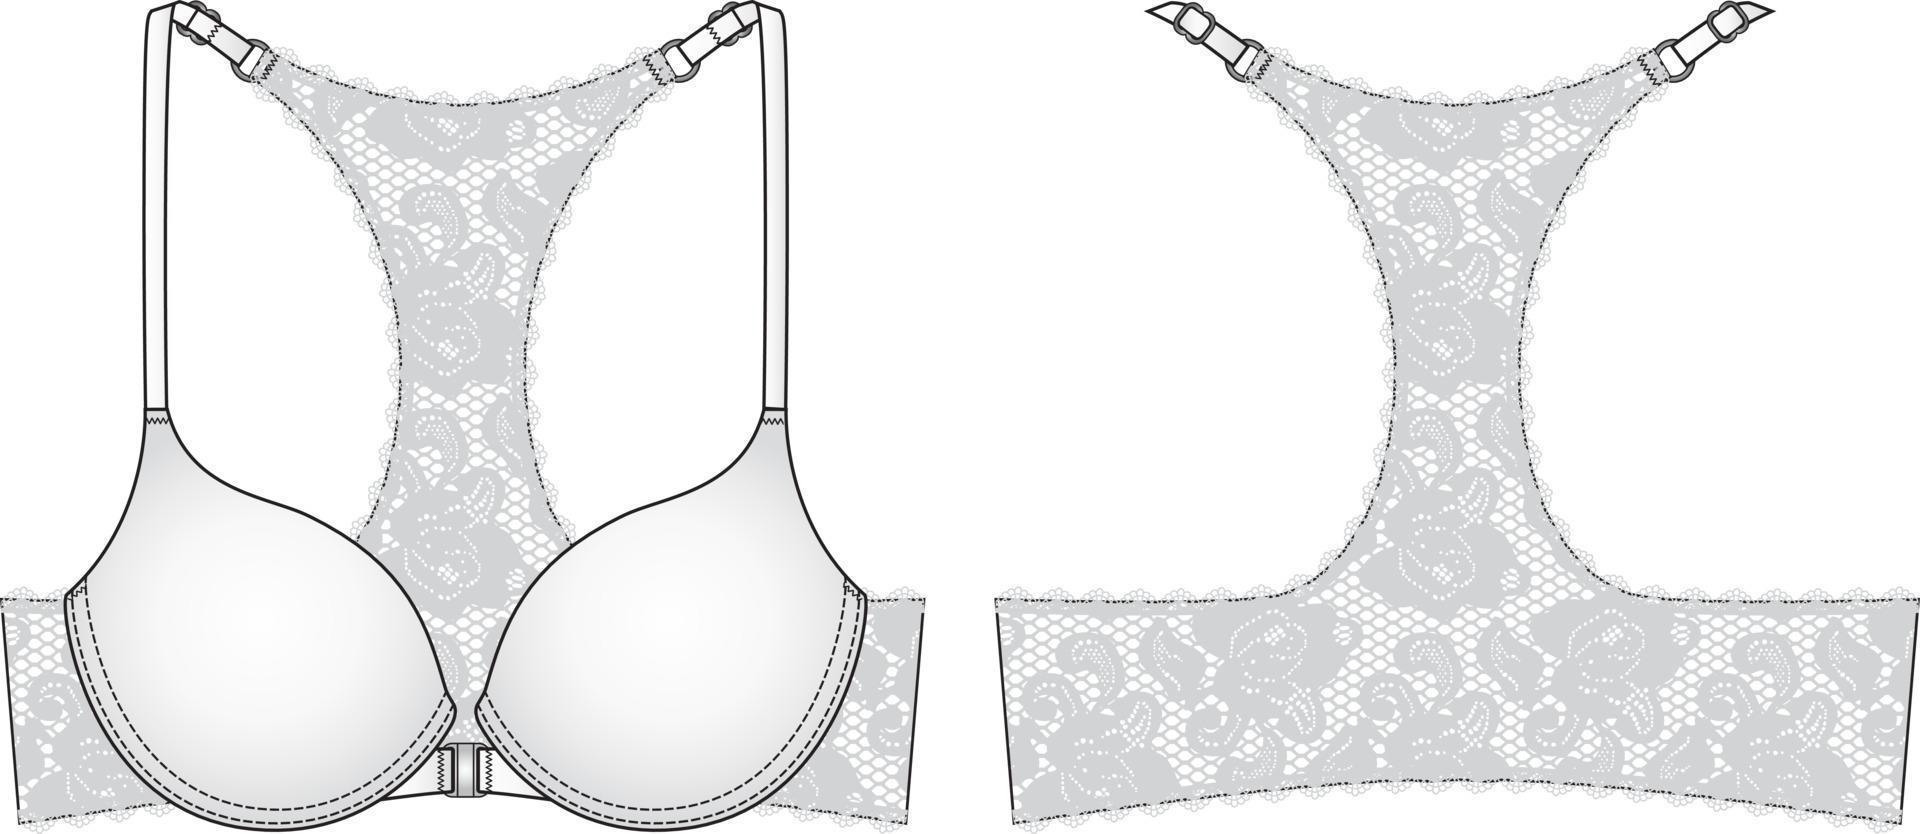 Lace Back Bra technical illustration. Editable lingerie flat sketch vector